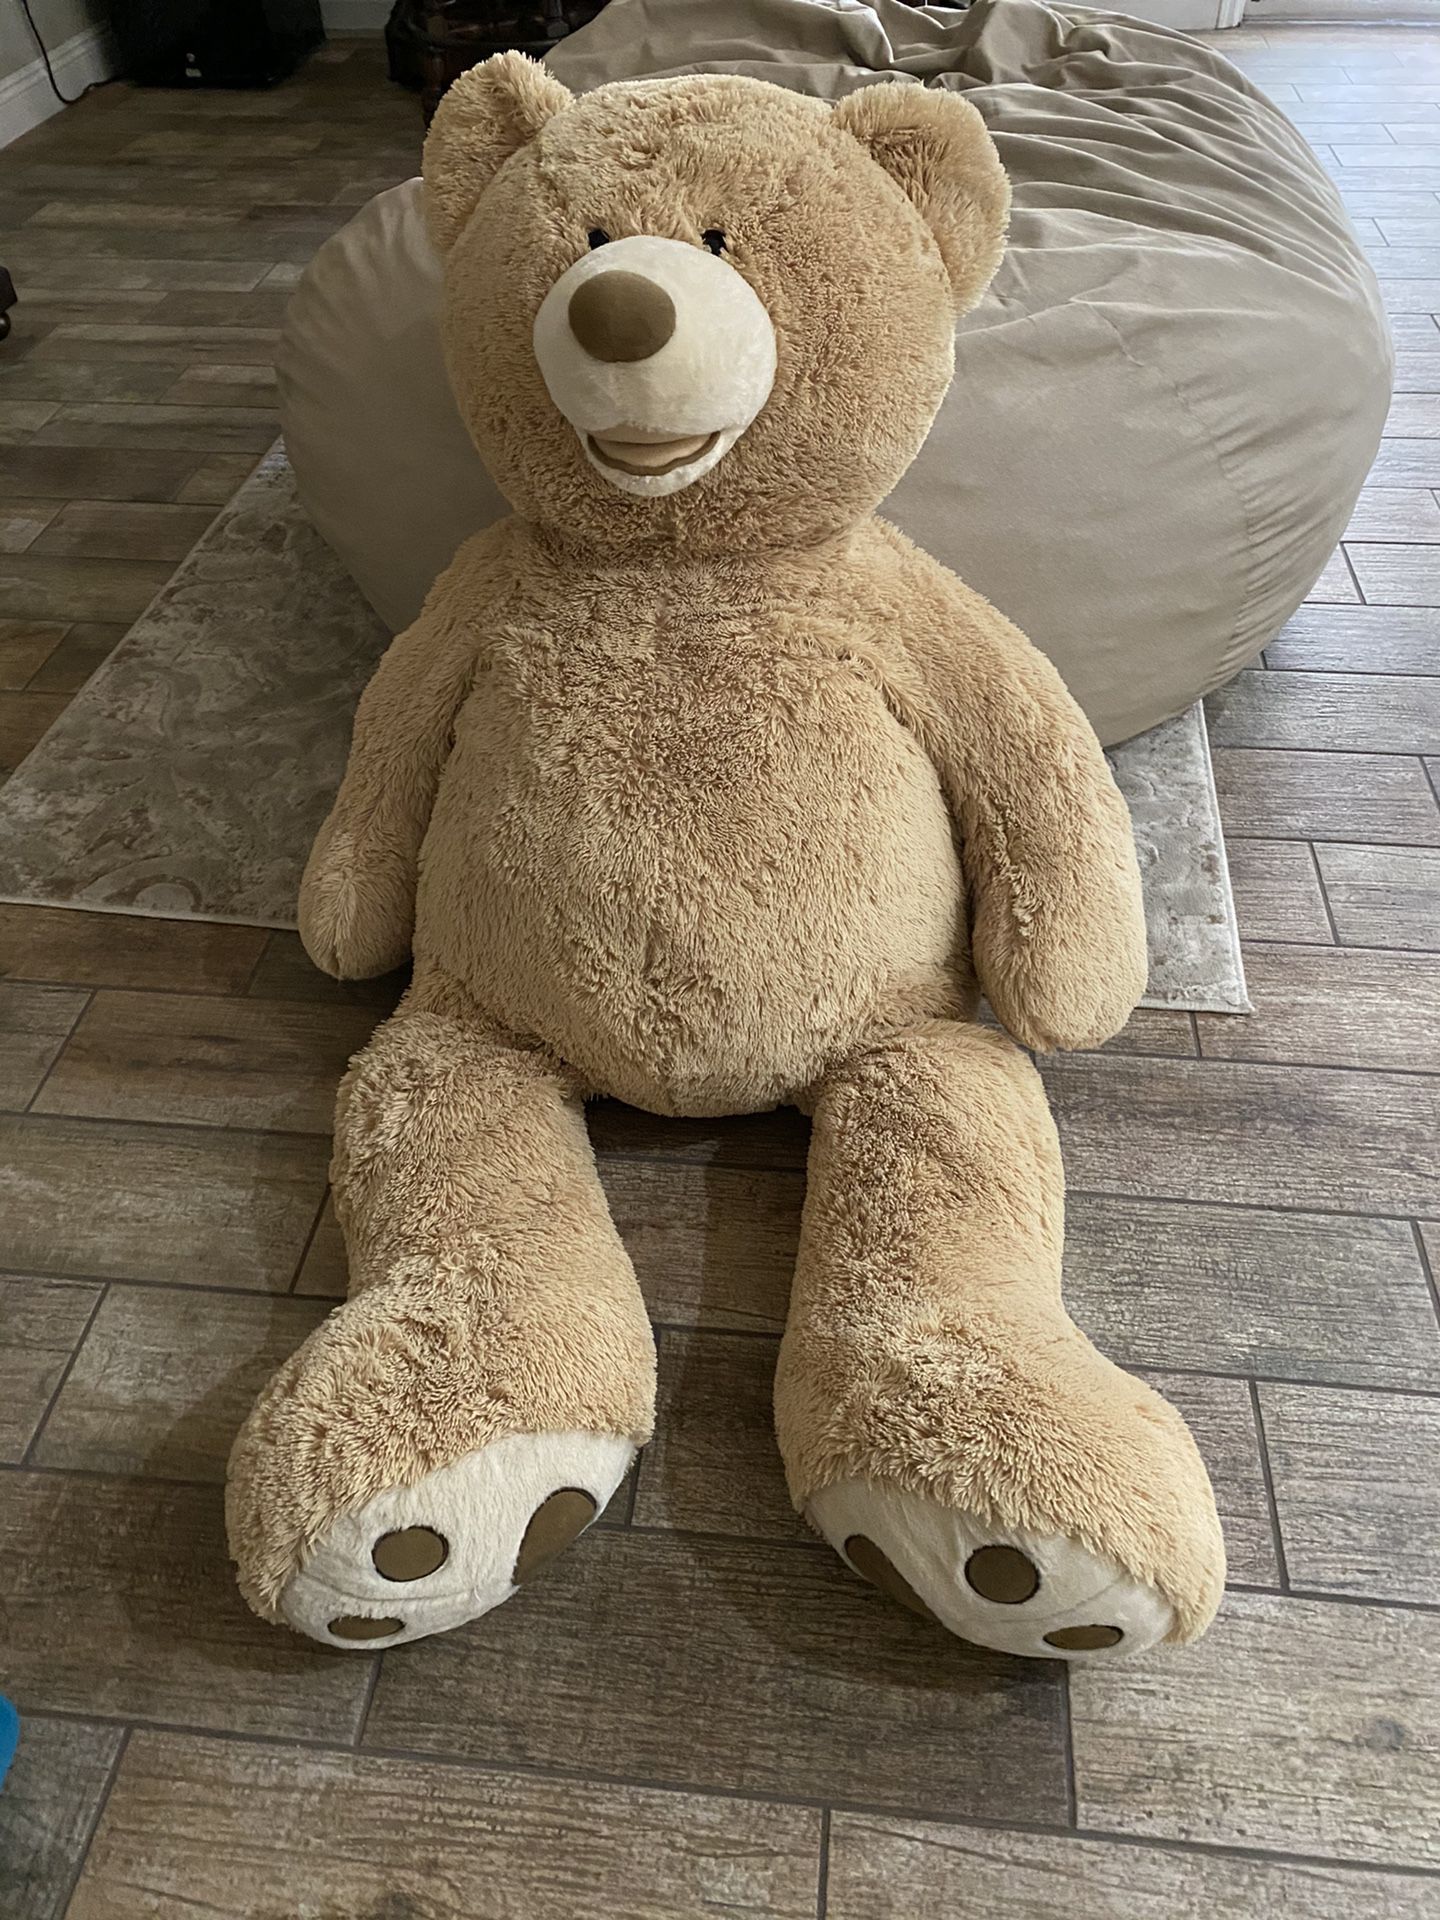 Stuffed bear from Costco